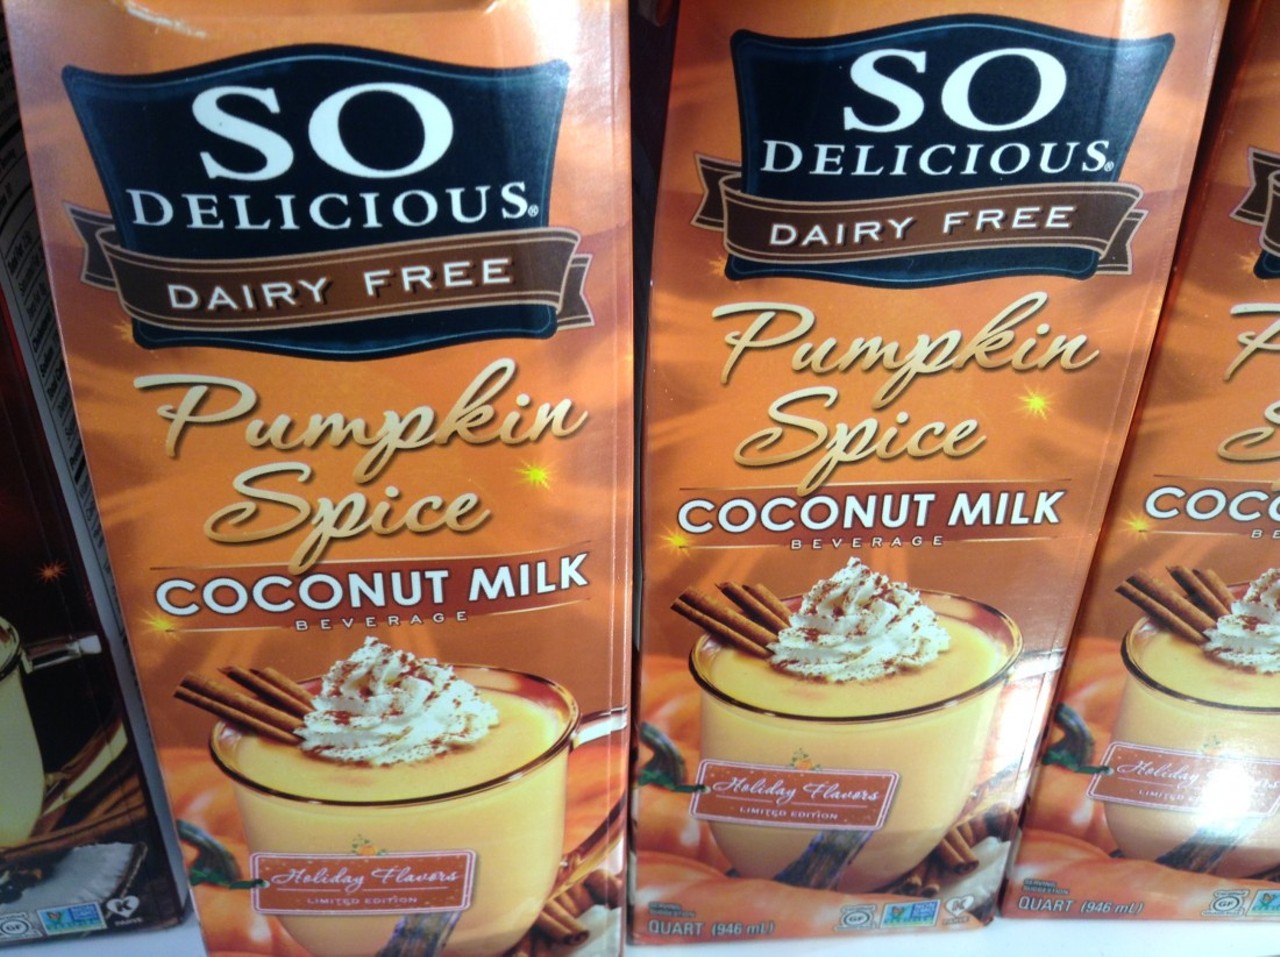 Pumpkin Spice Coconut Milk
Courtesy Flickr/Mike Mozart